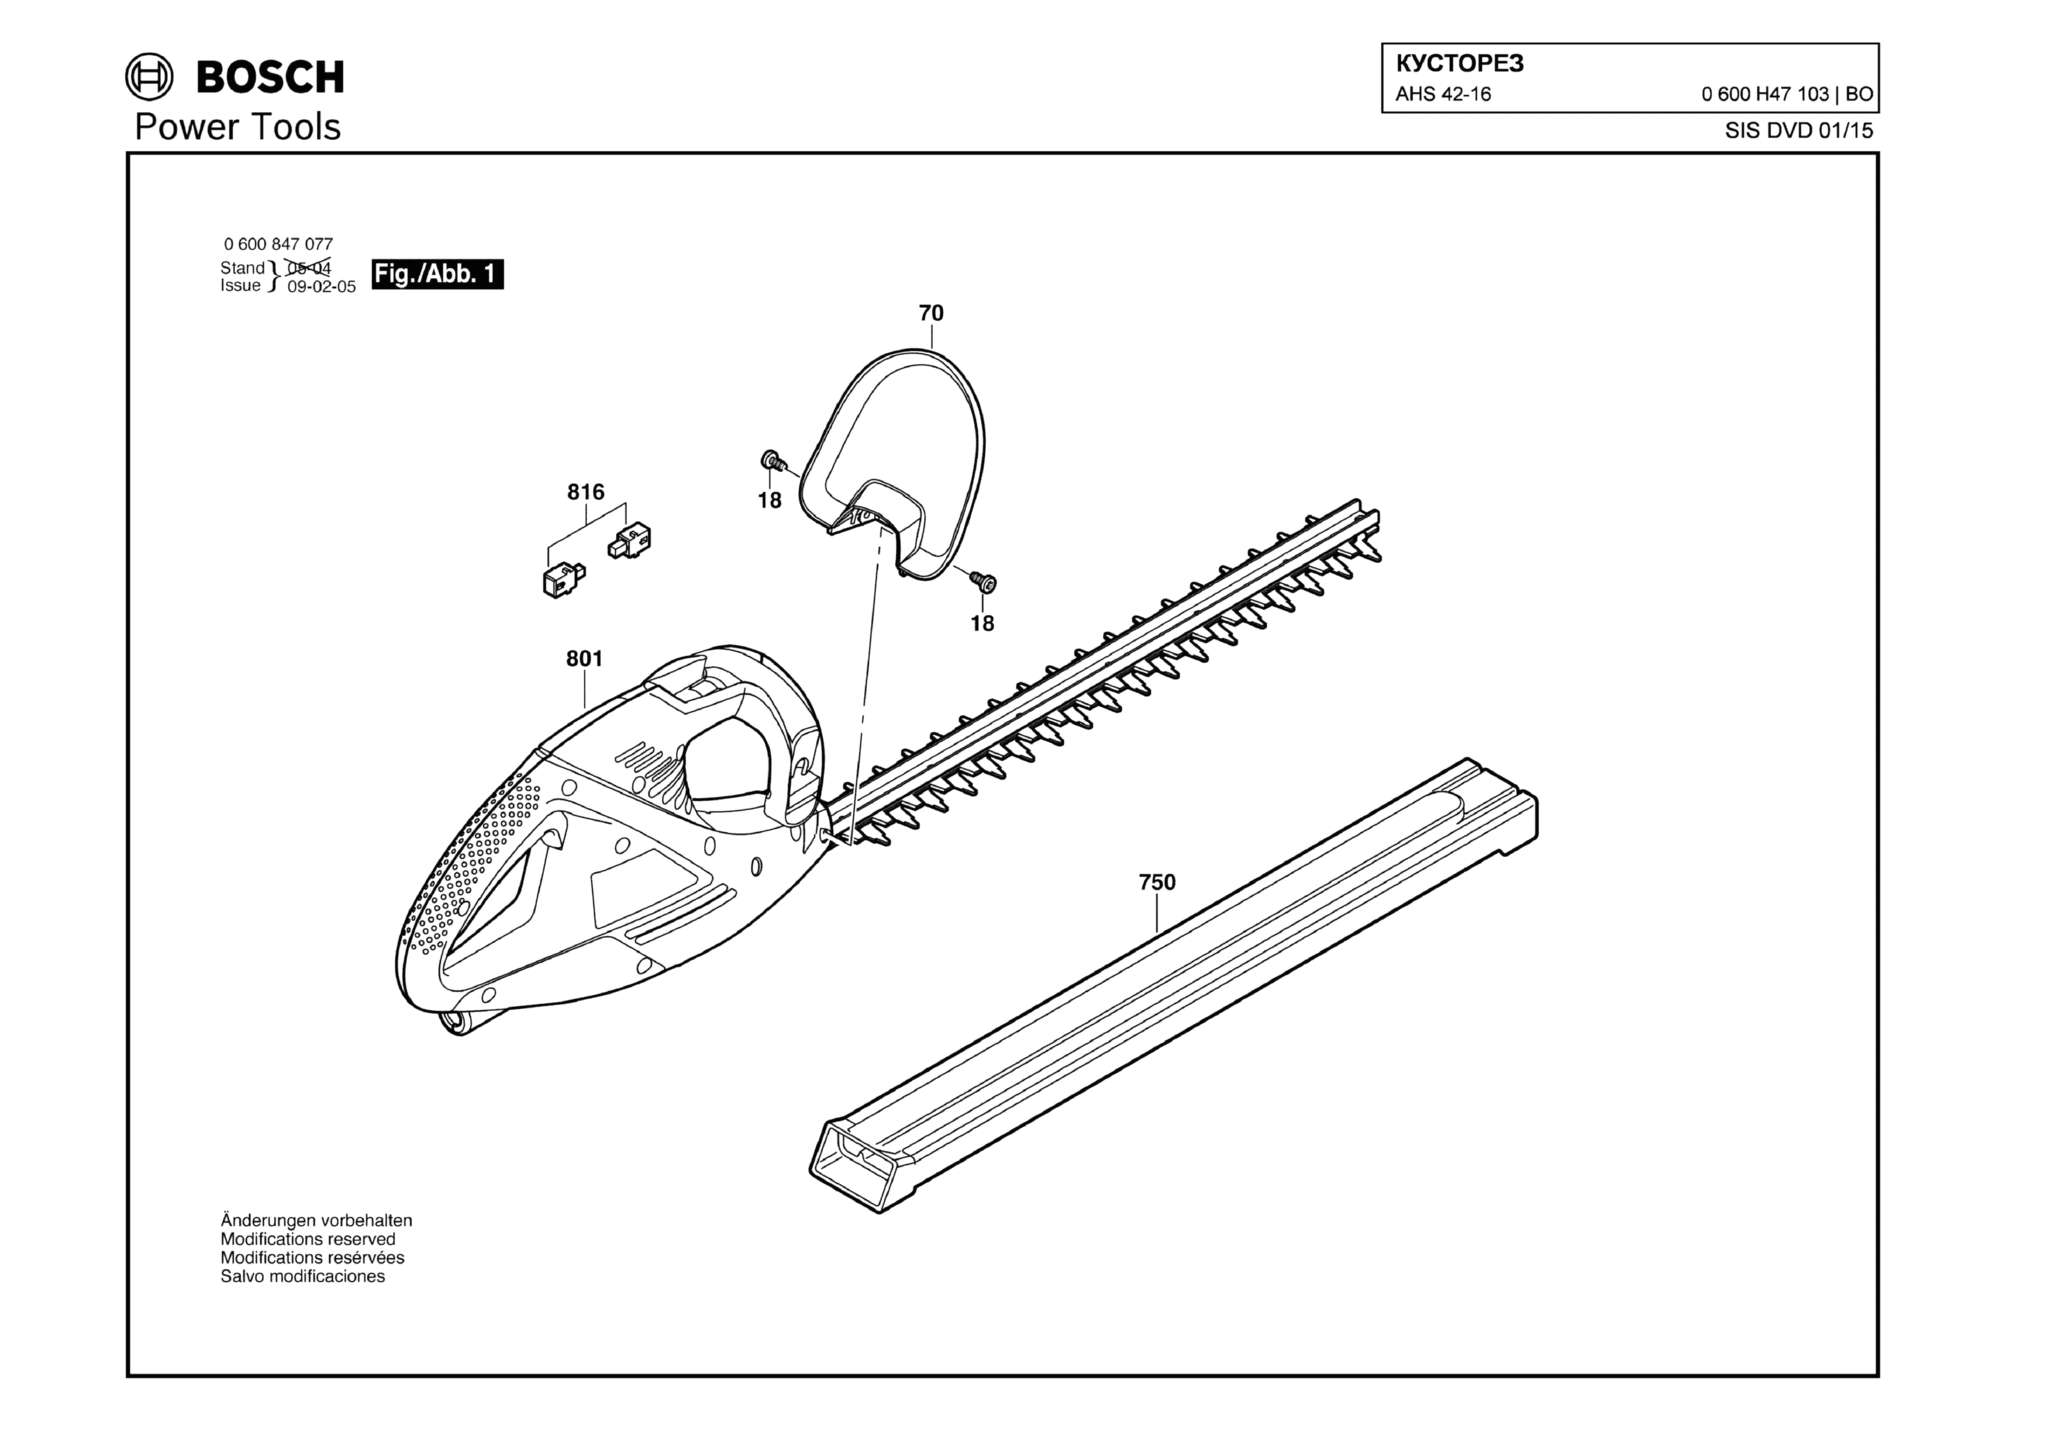 Запчасти, схема и деталировка Bosch AHS 42-16 (ТИП 0600H47103)